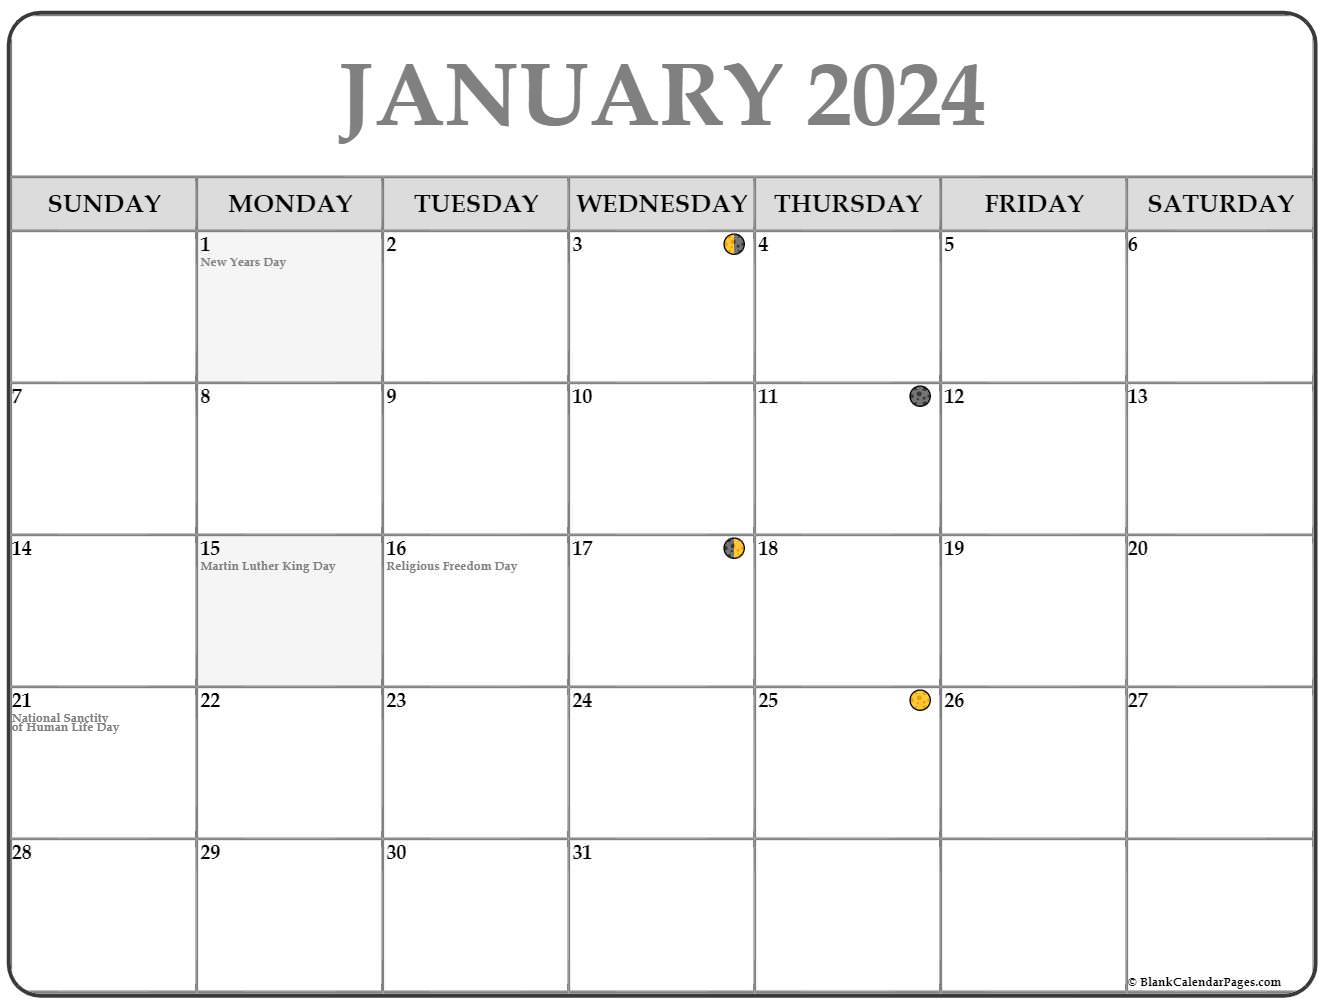 free printable moon phase calendar 2021 January 2021 Lunar Calendar Moon Phase Calendar free printable moon phase calendar 2021